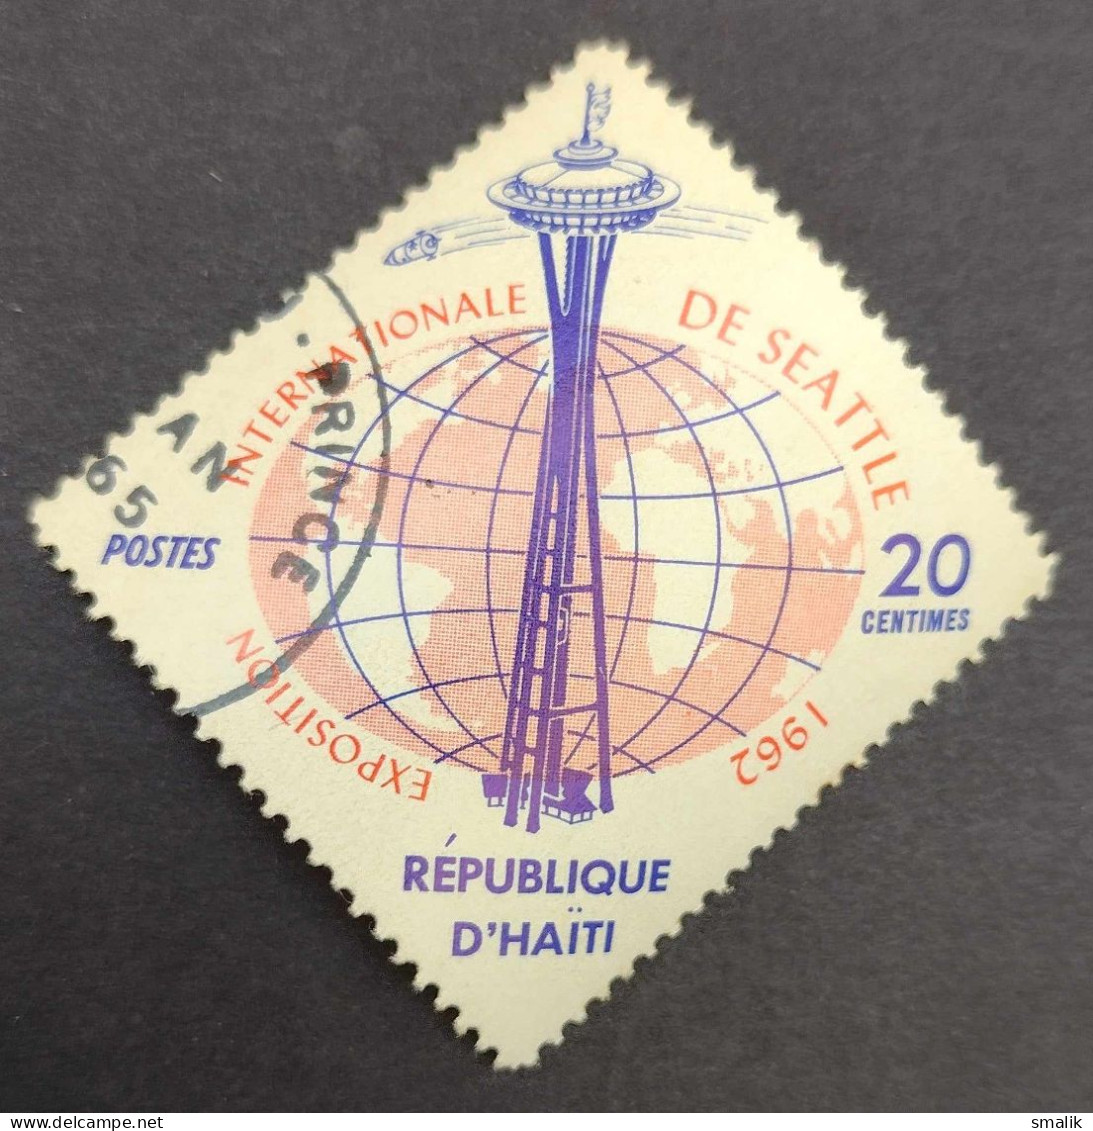 HAITI Republic 1962 - World Expo, Fine Used Stamp - Haiti